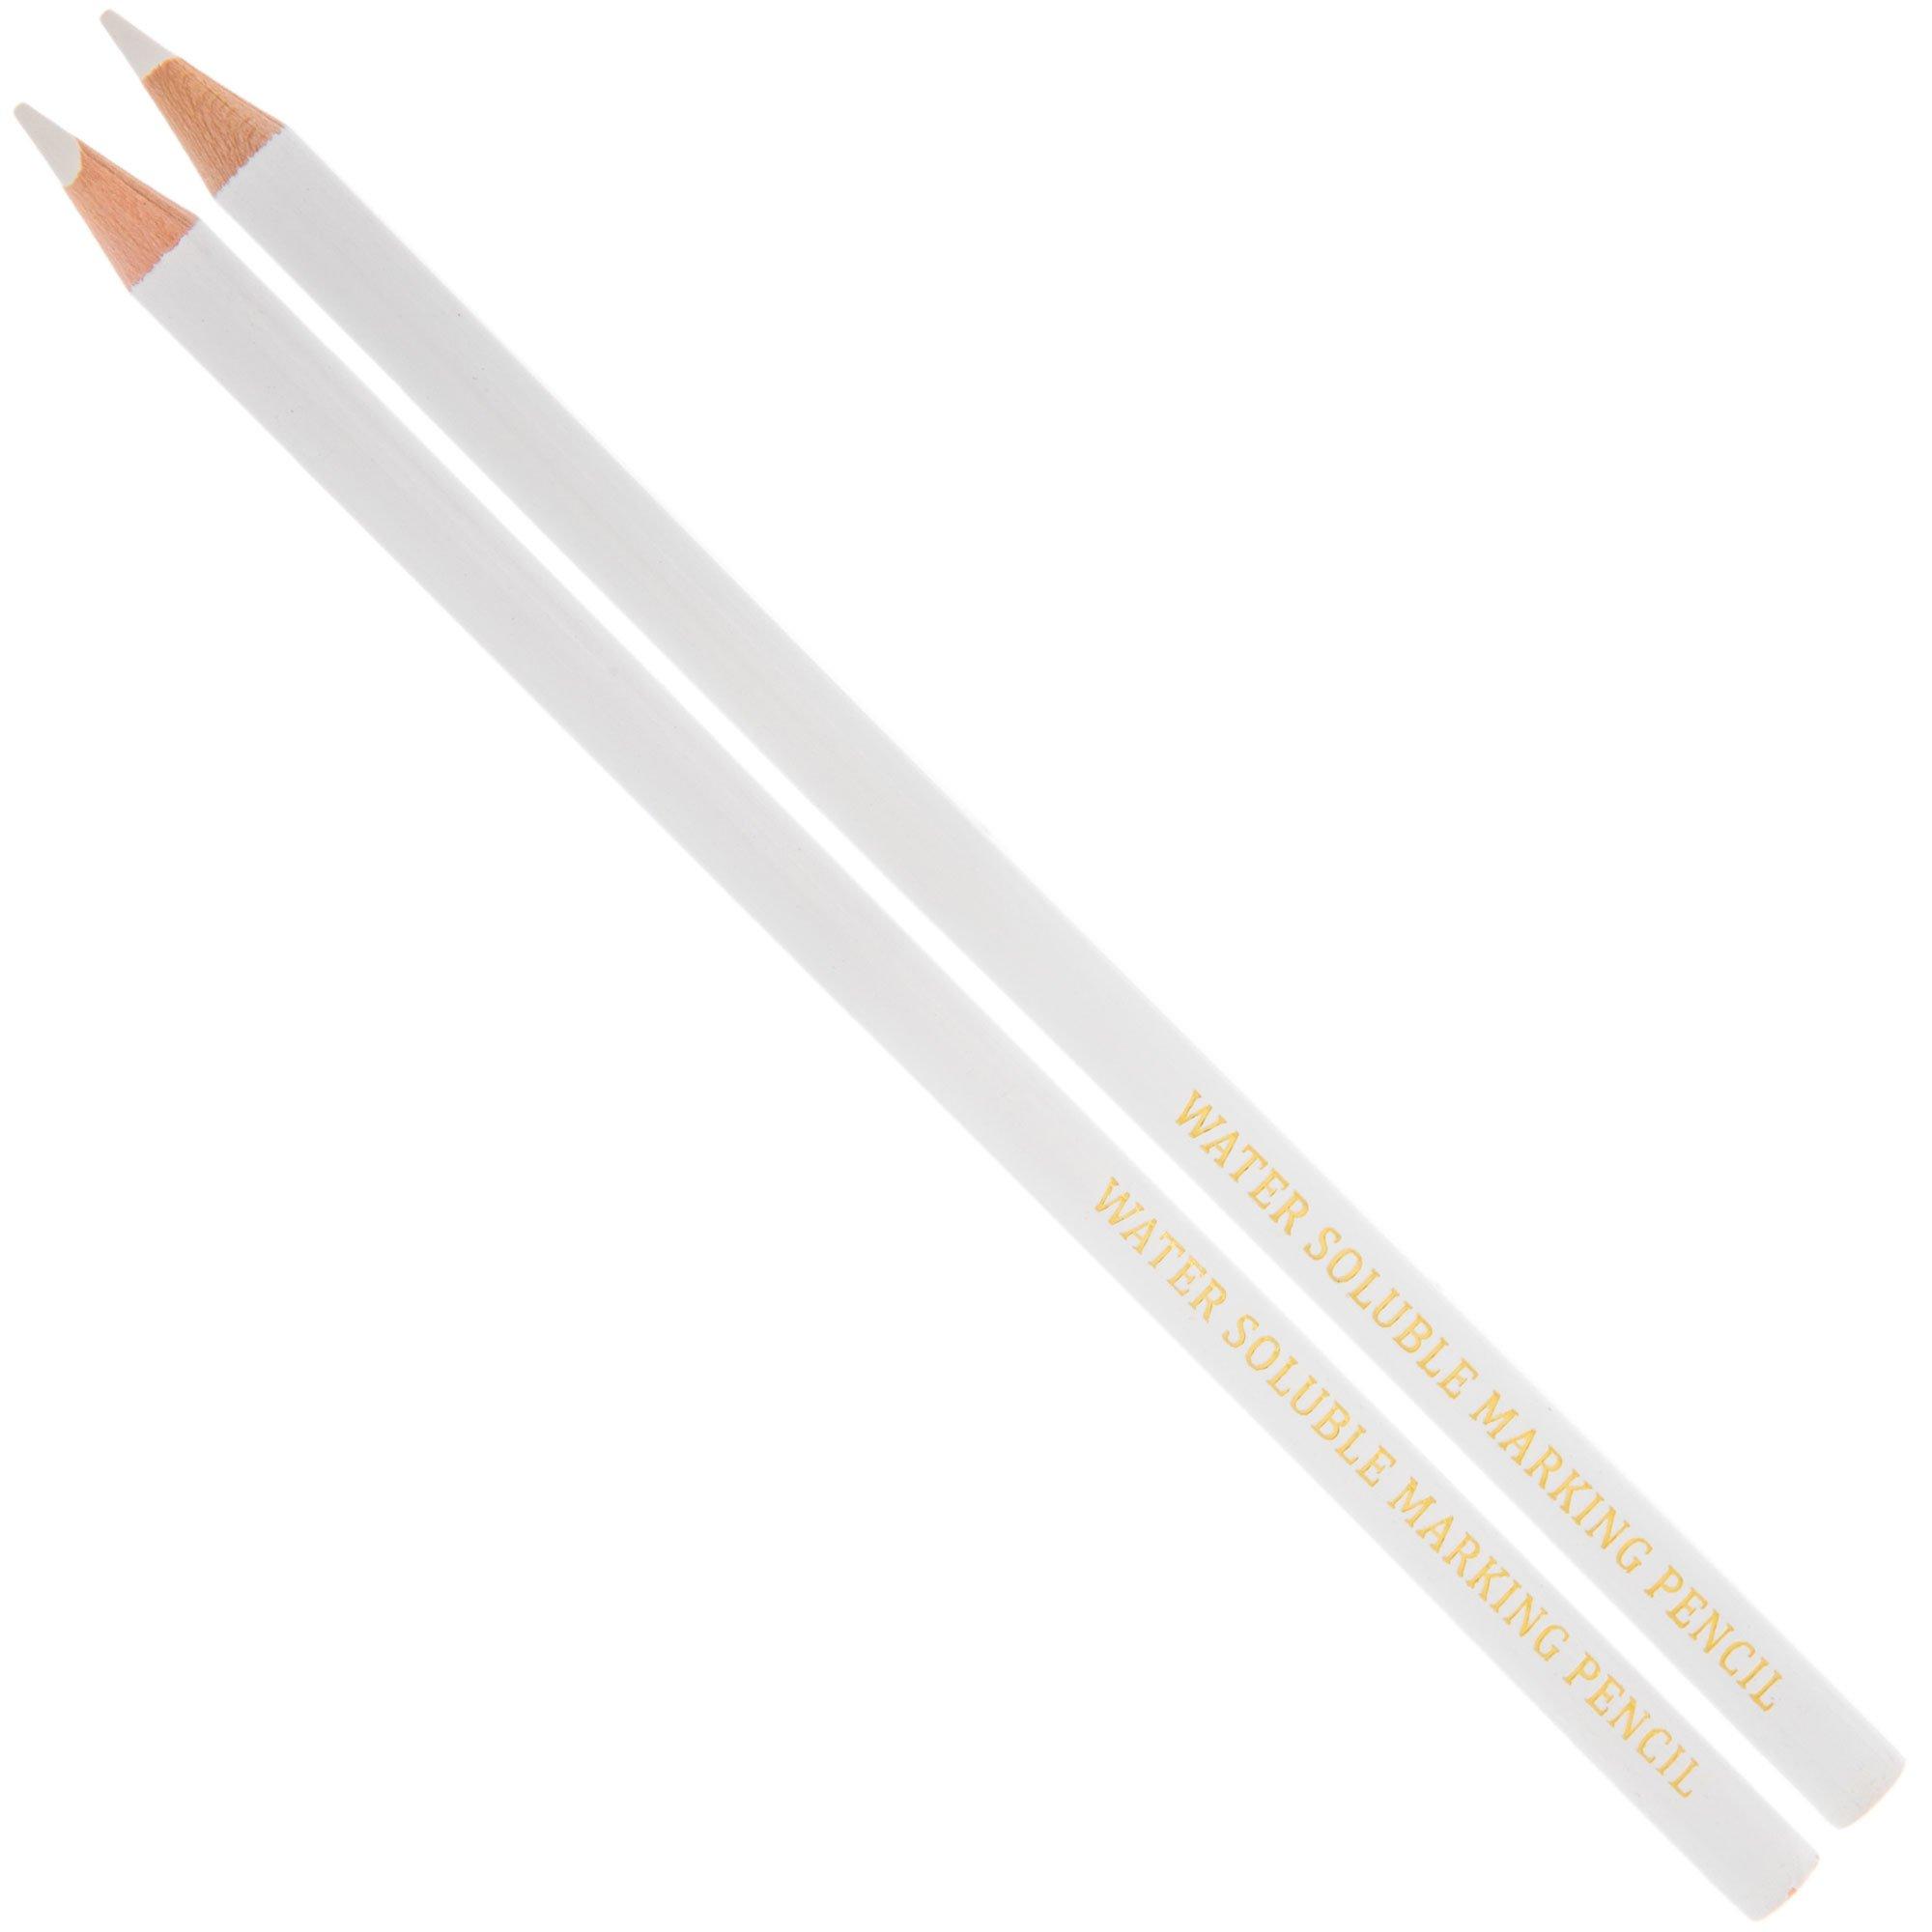 Sewline Fabric Marking Pencil - White